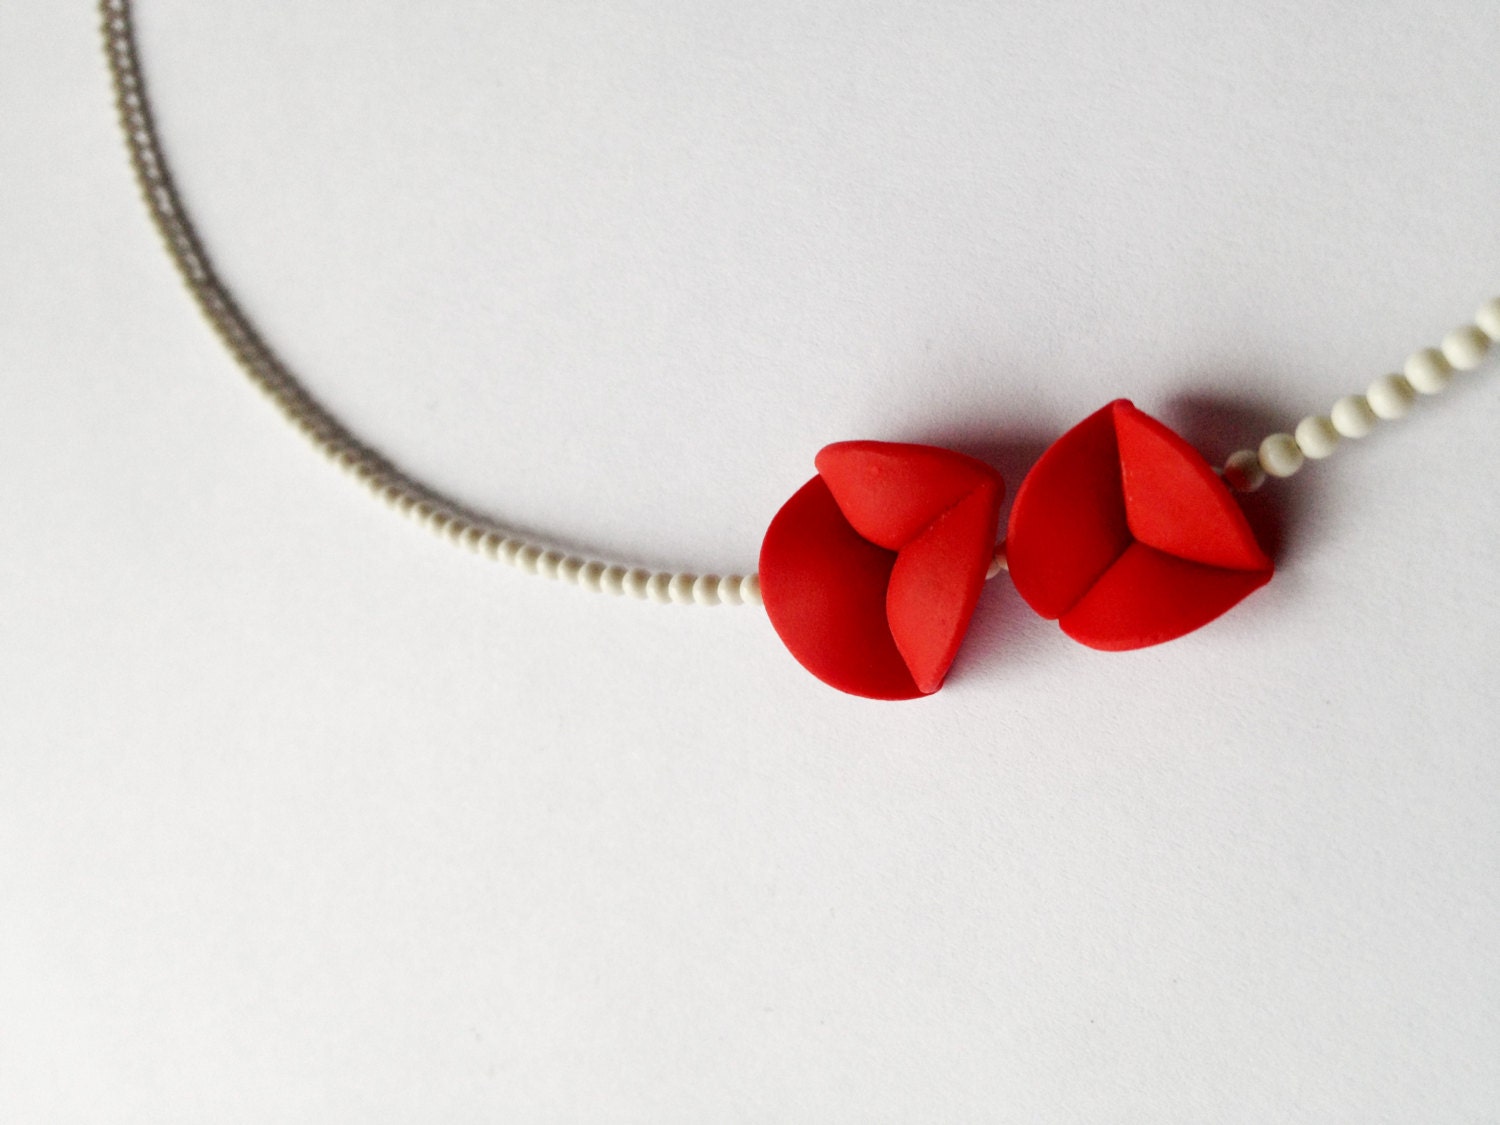 minimal chic necklace 'nO 27 red flower petals between white corals''